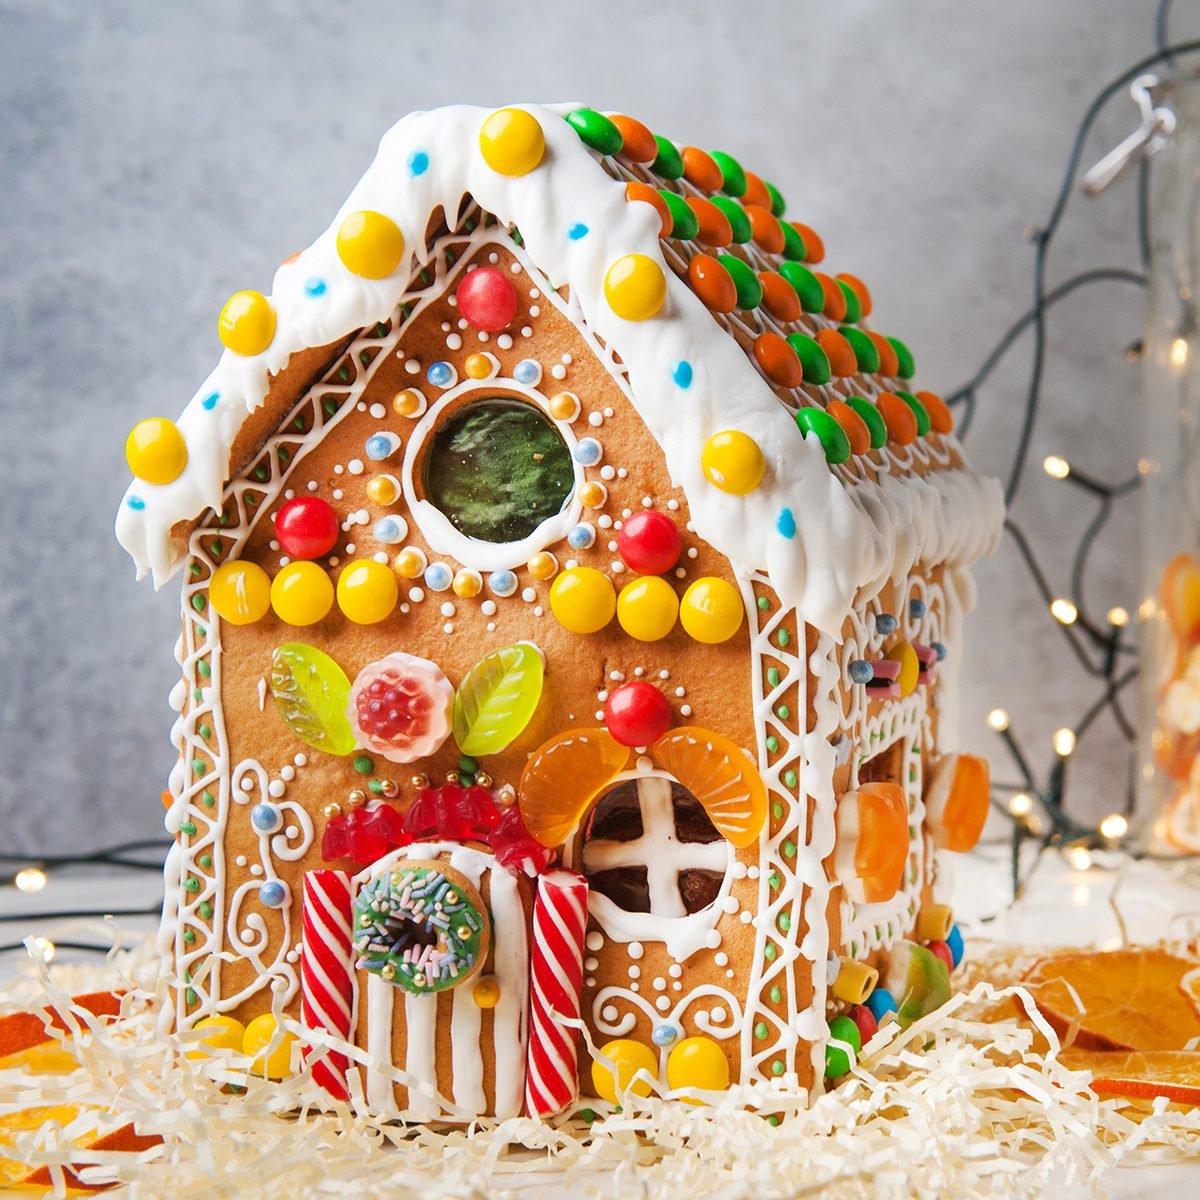 Beautiful gingerbread house